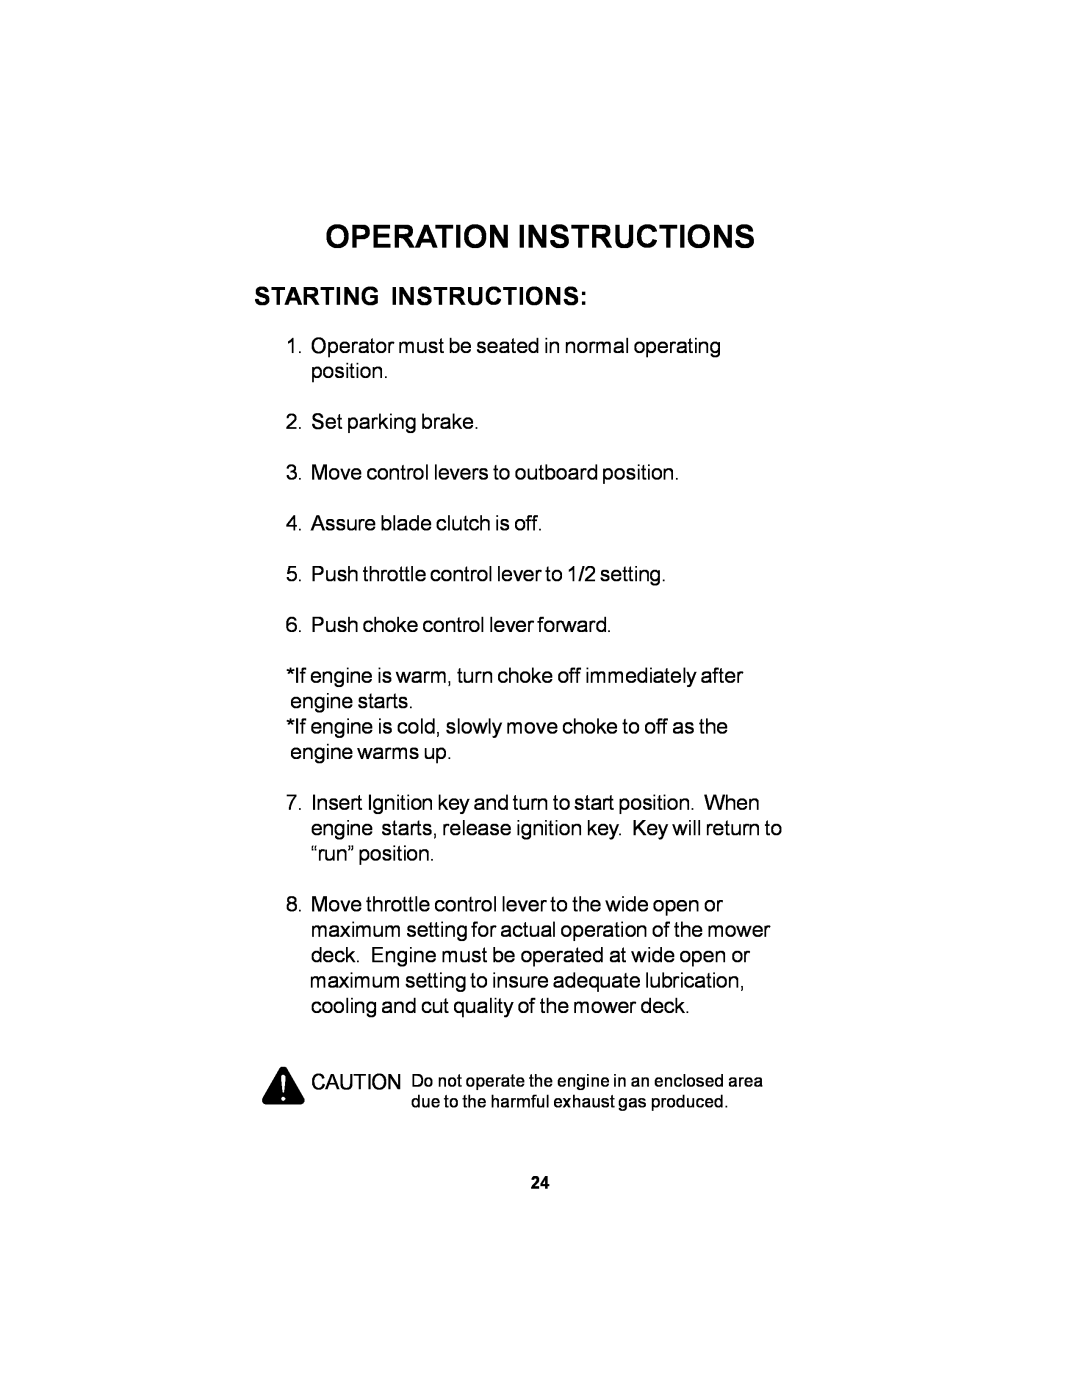 Dixon 12881-106 manual Starting Instructions, Operation Instructions 